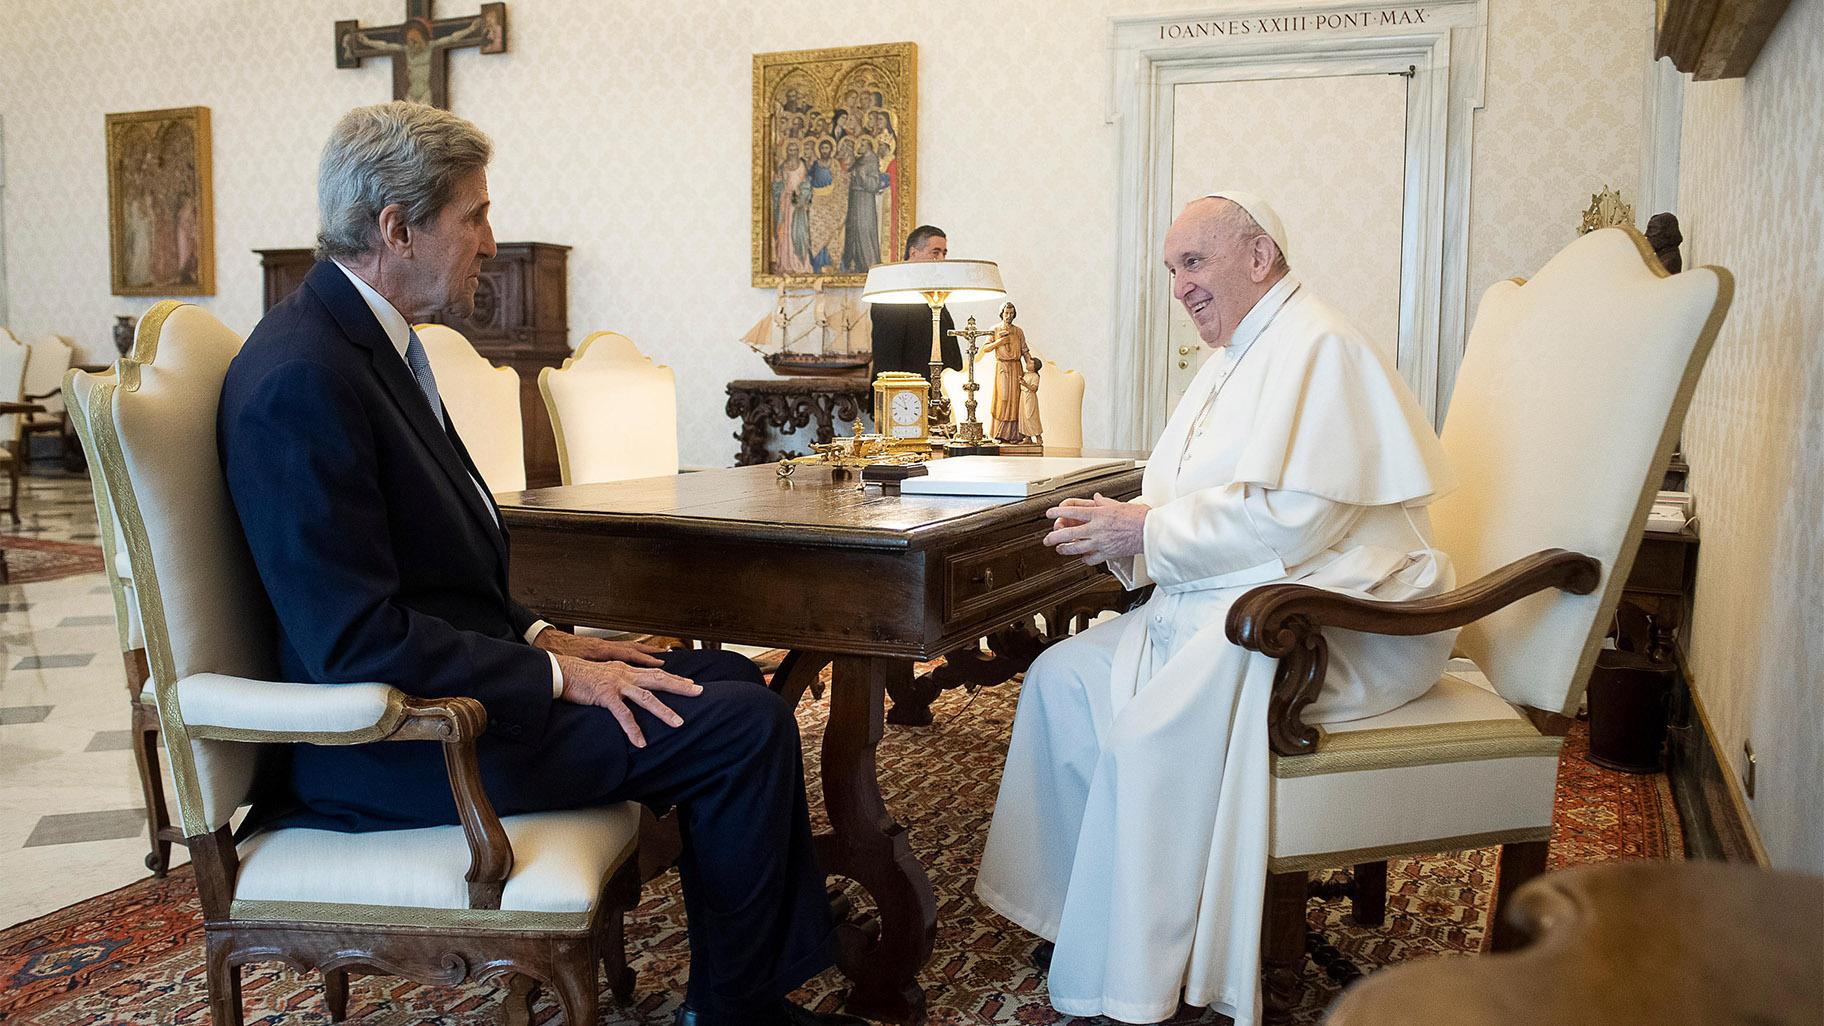 Pope Francis and John Kerry talk during their meeting at the Vatican, Saturday, May 15, 2021. (Vatican Media via AP)